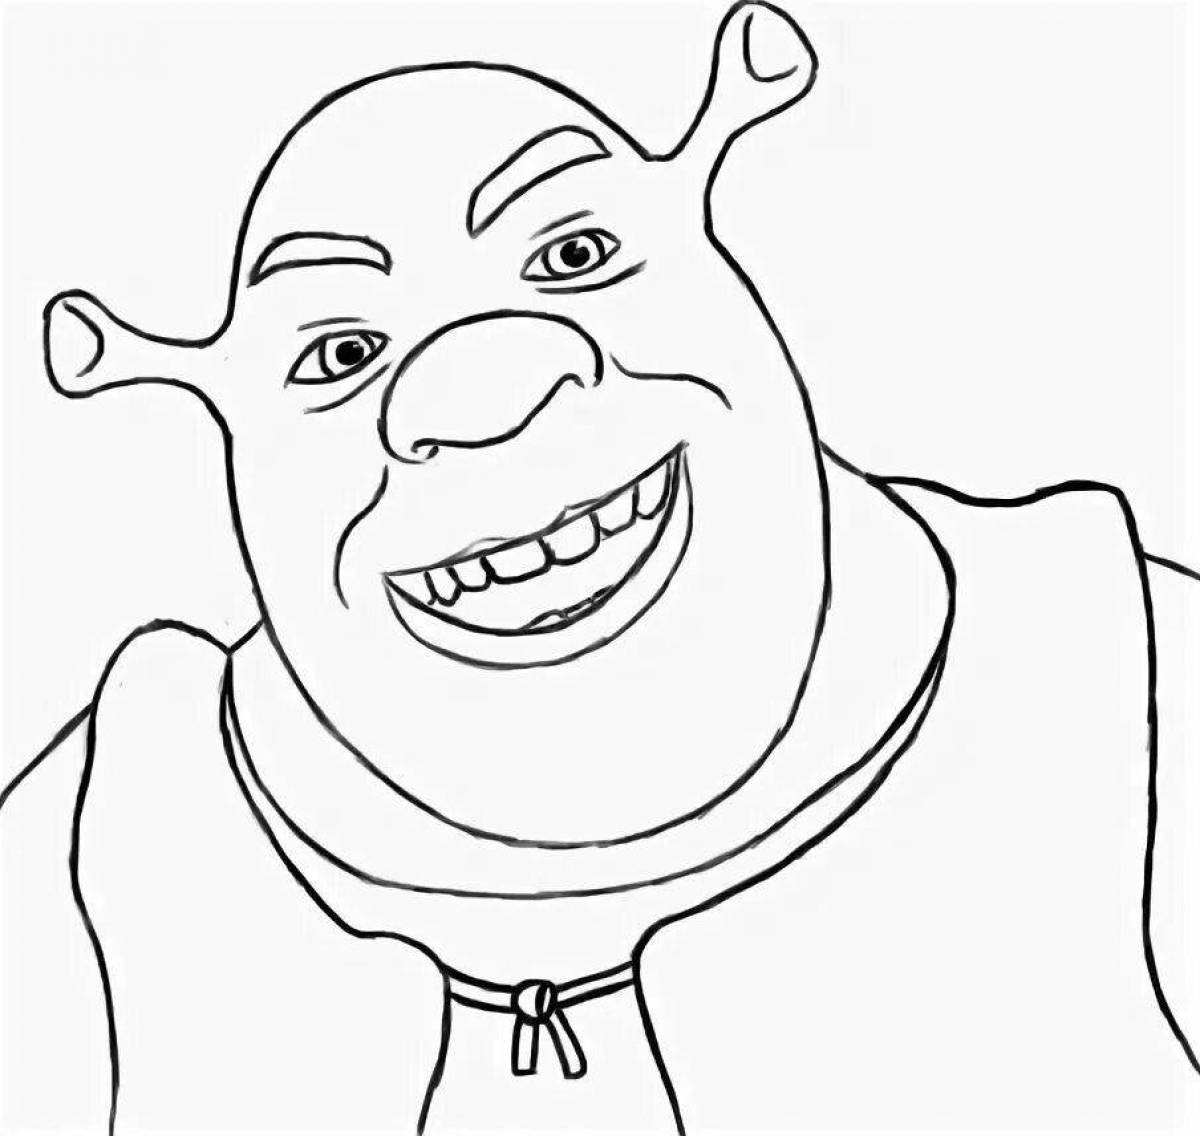 Sweet Shrek coloring page